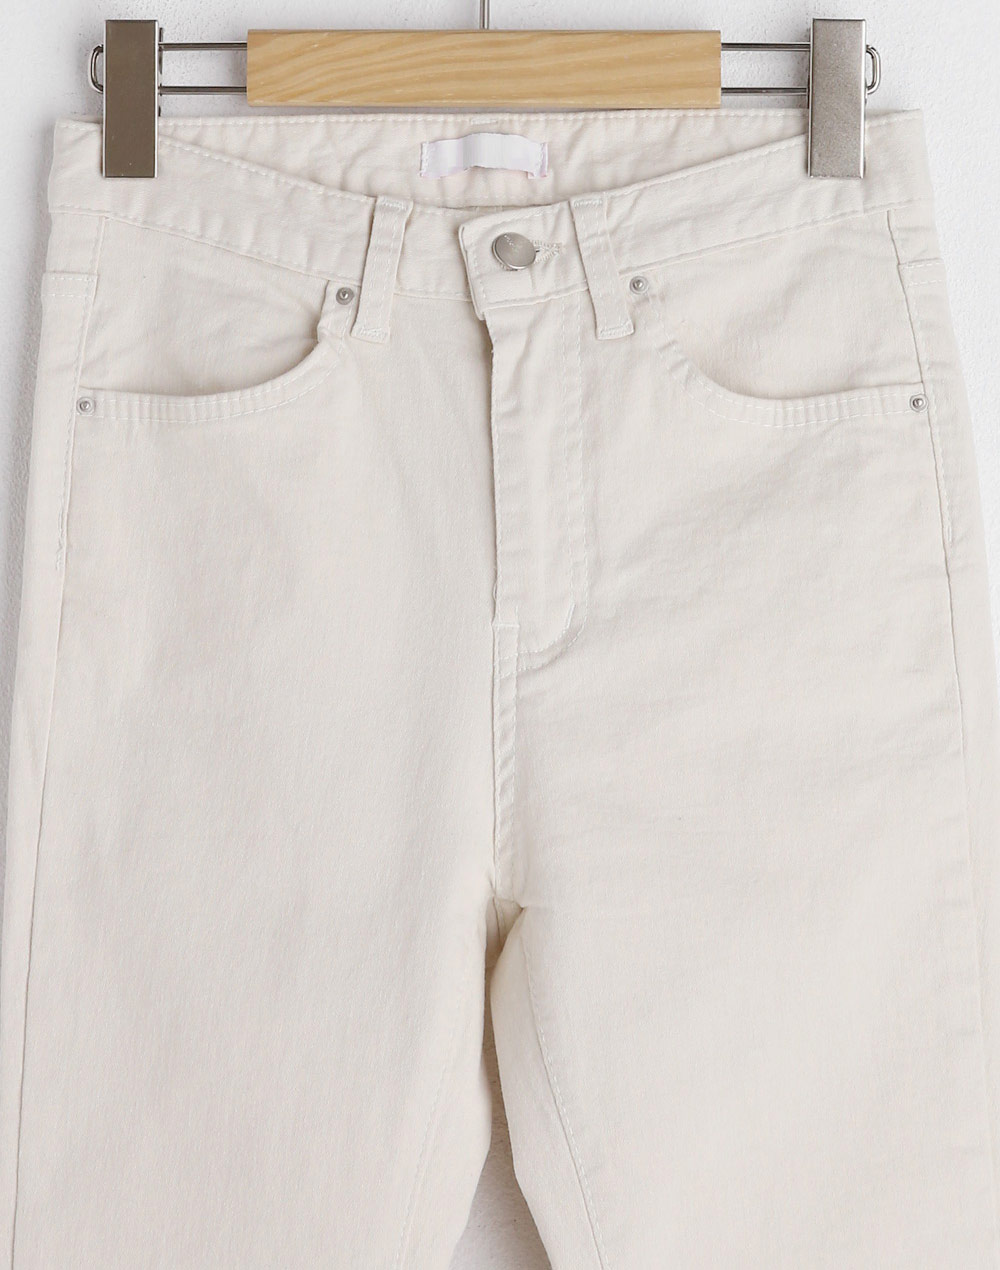 skinny pants・t279586（パンツ/パンツ）| 1016_kanako | 東京ガールズマーケット